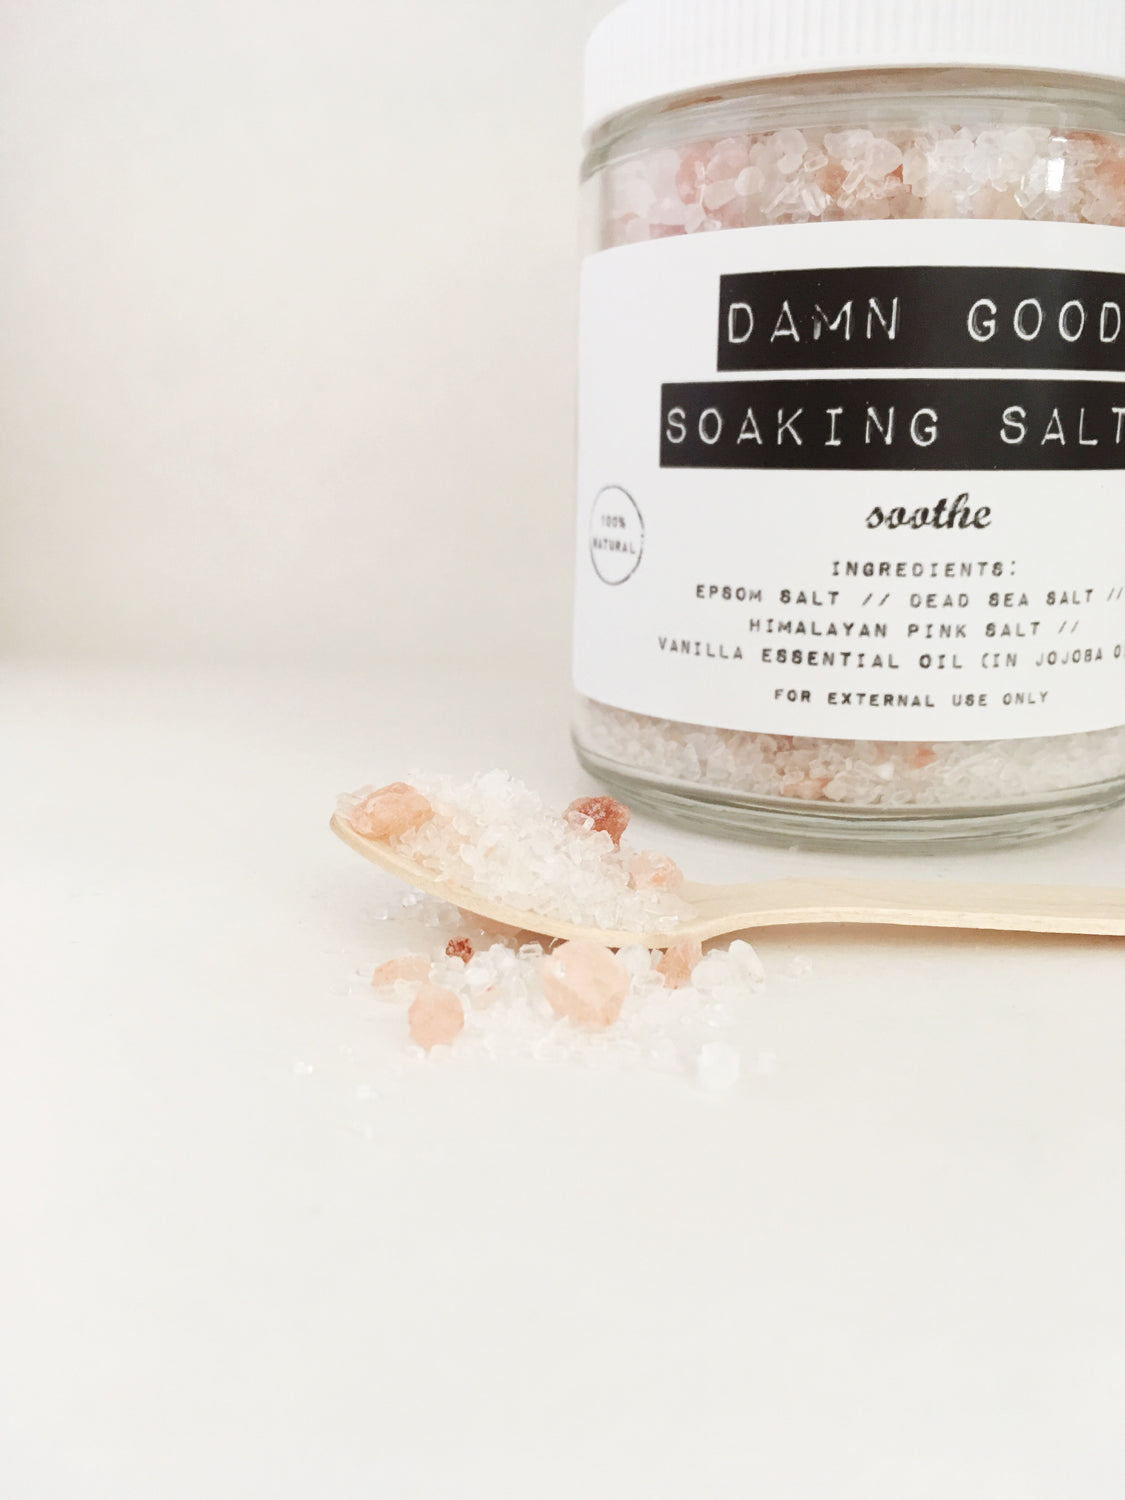 Damn Good Soaking Salts // Soothe